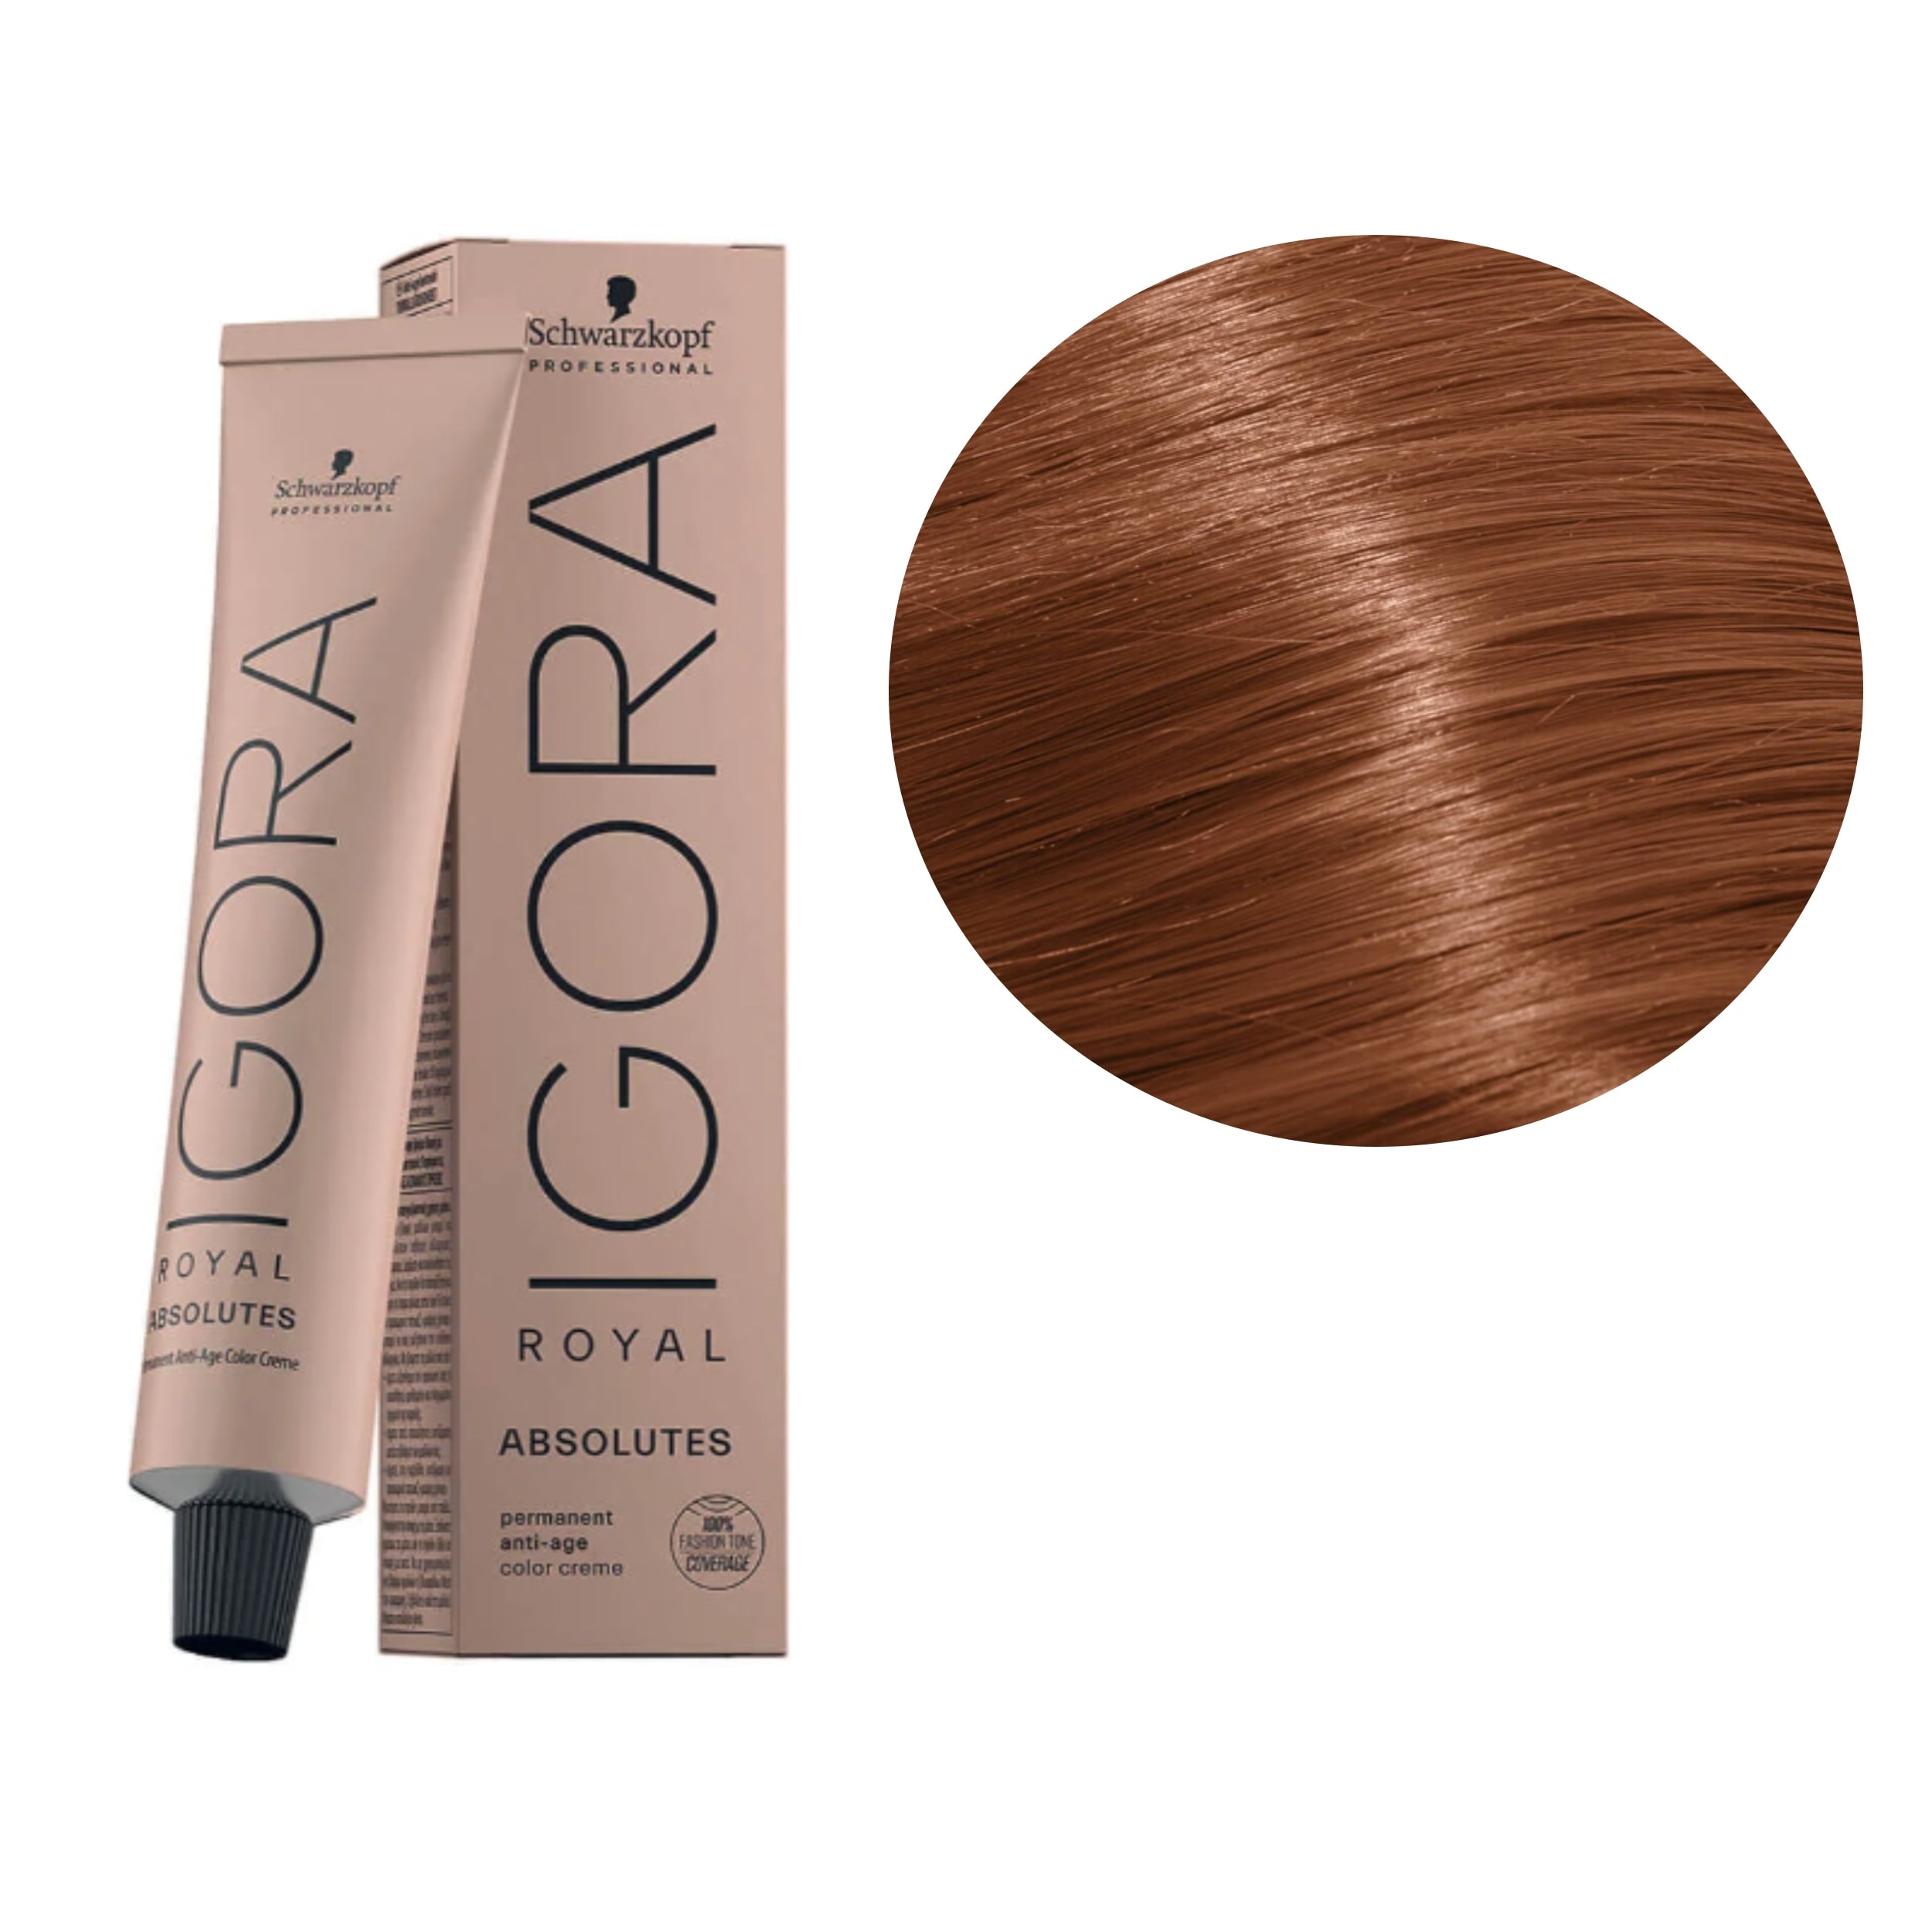 Igora Royal Tube of Hair Colour